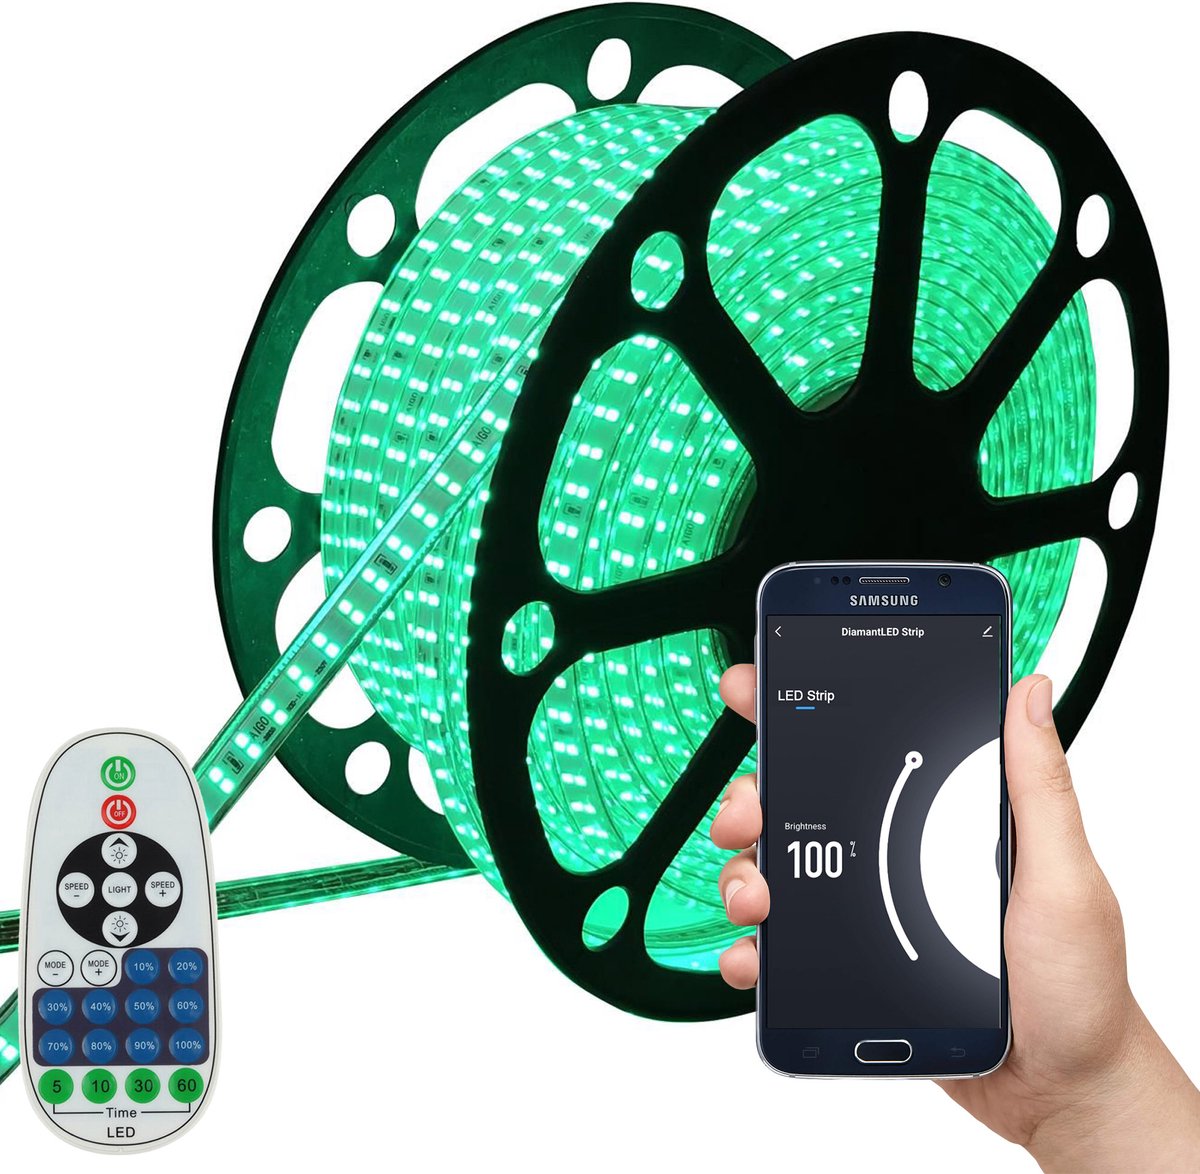 LED Strip Groen - 20 Meter aan één stuk - 180 LED's per meter - Met Wi-Fi App + IR 23 knops afstandsbediening - Smarthome - Google Home/Amazon Alexa - Waterdicht - Makkelijke mobiele App voor bedienen inclusief afstandsbediening - iOS en Android